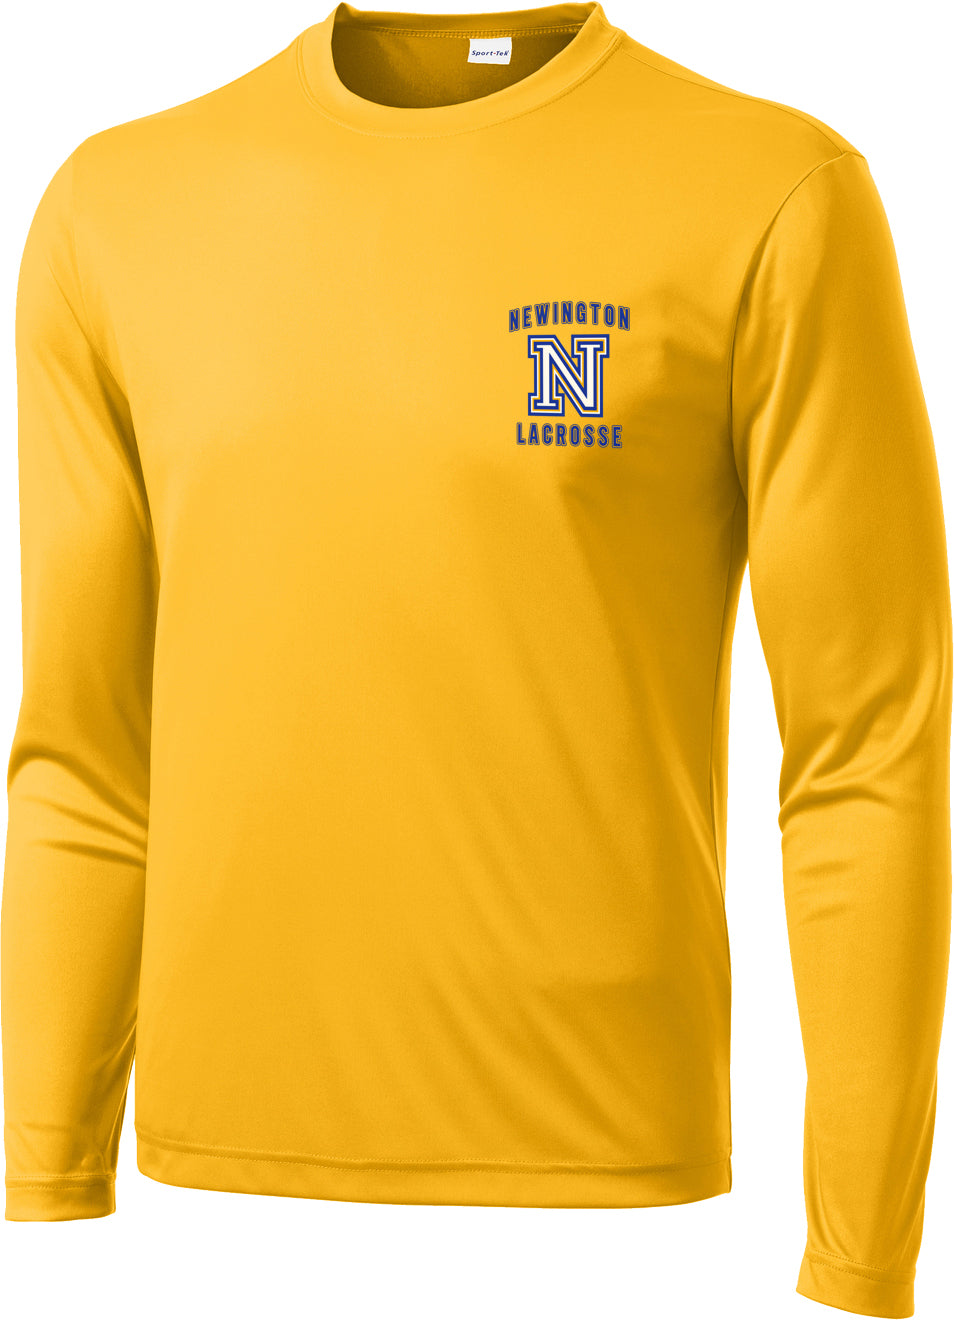 Newington Lacrosse Gold Long Sleeve Performance Shirt